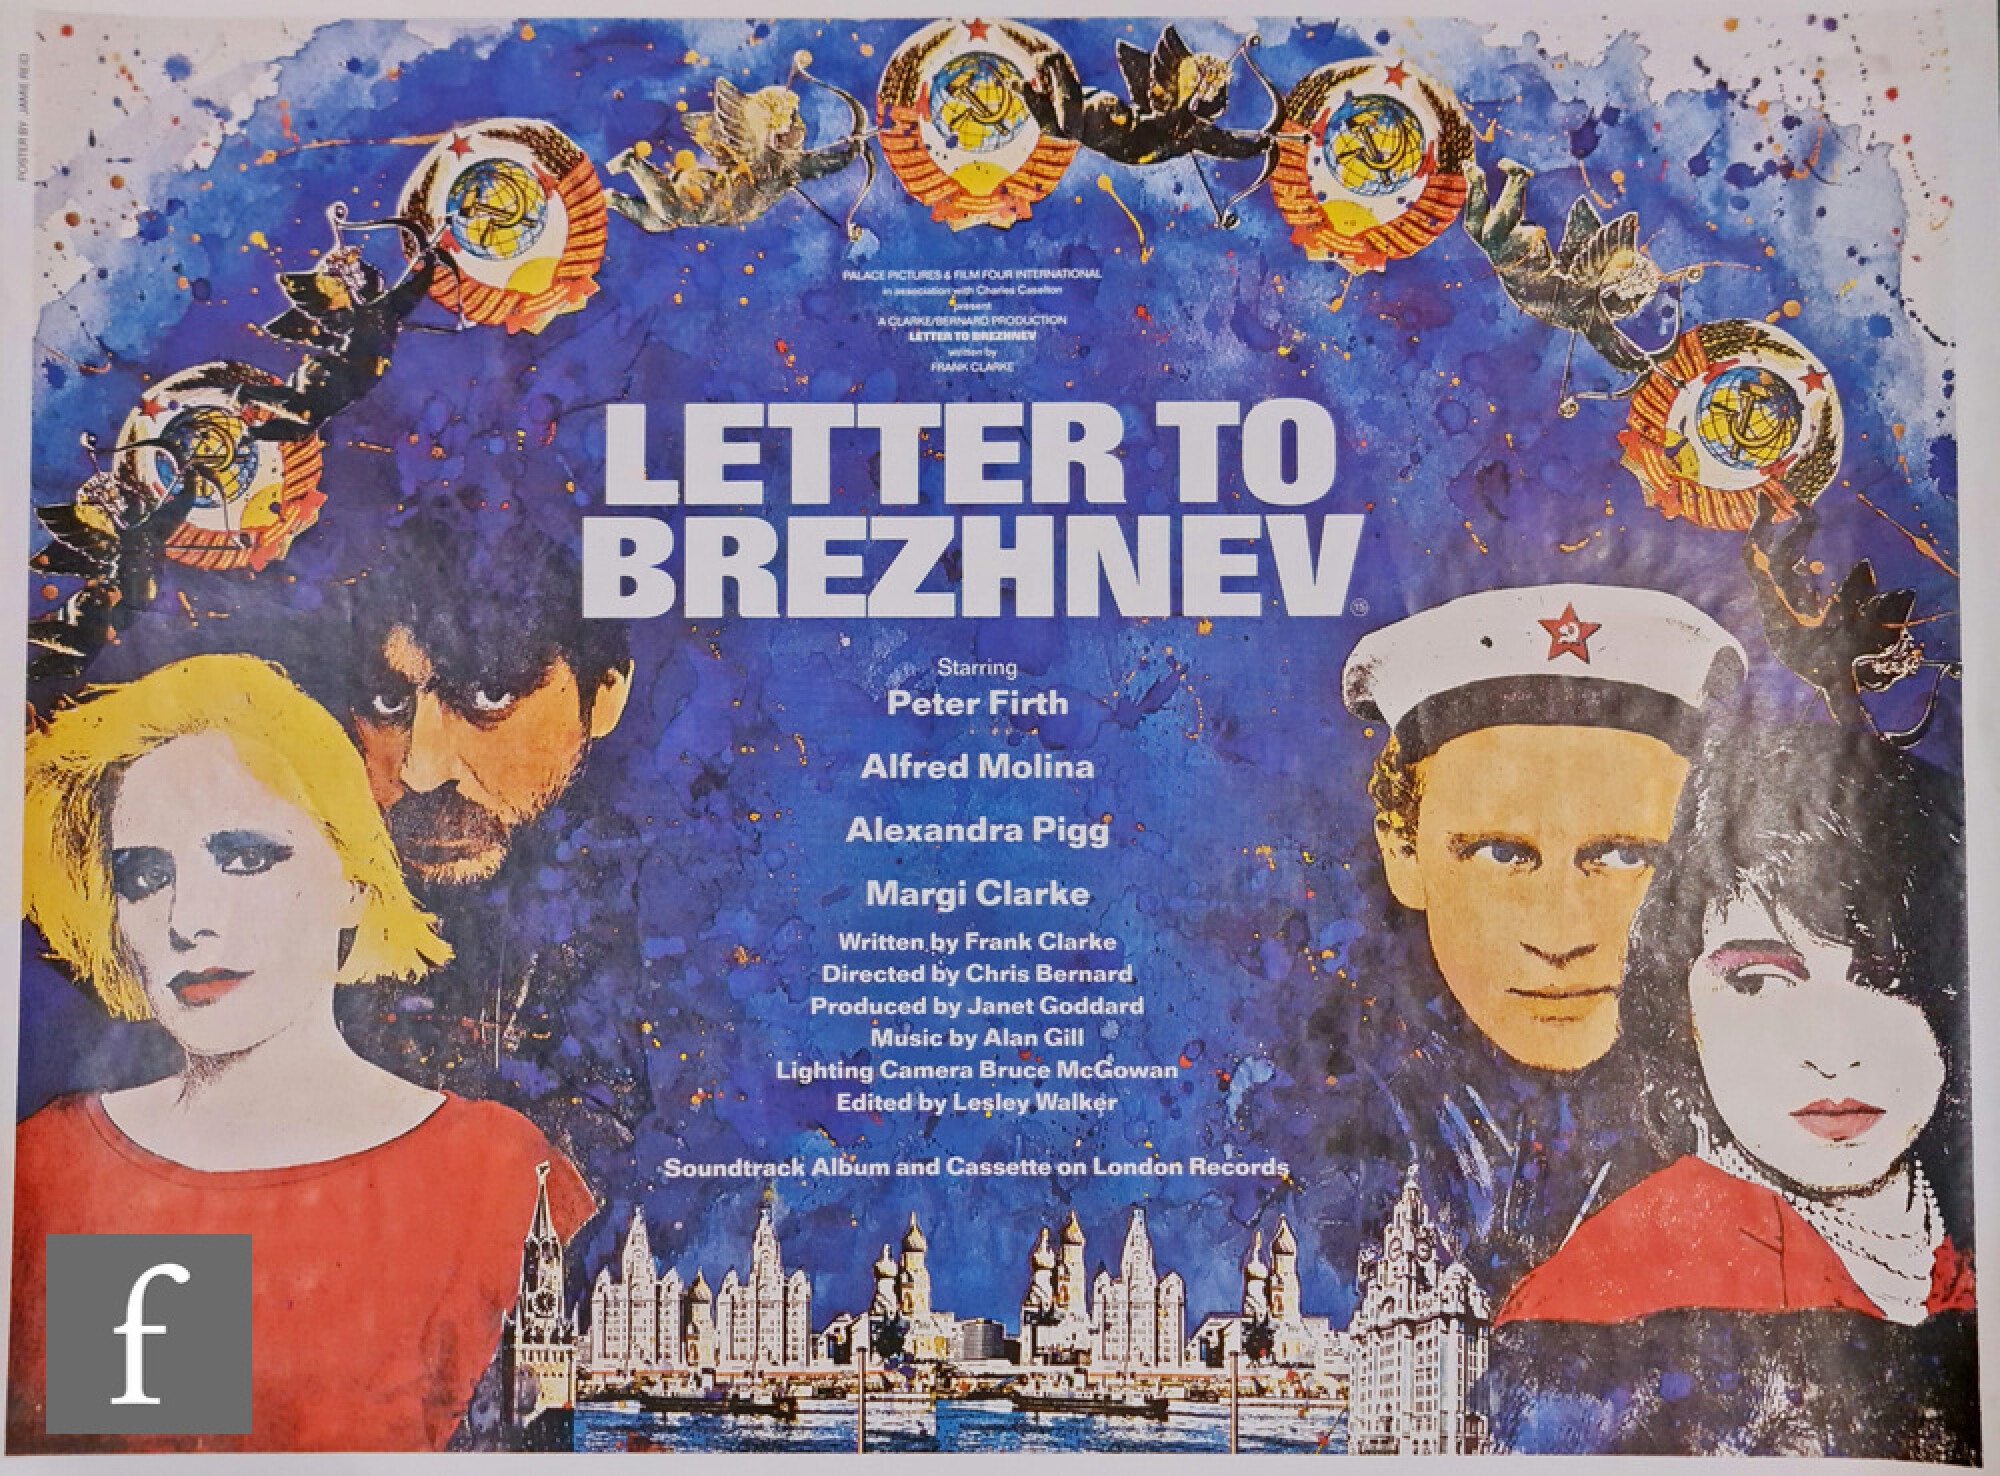 An original 1985 Letter To Brezhnev British UK Quad film poster